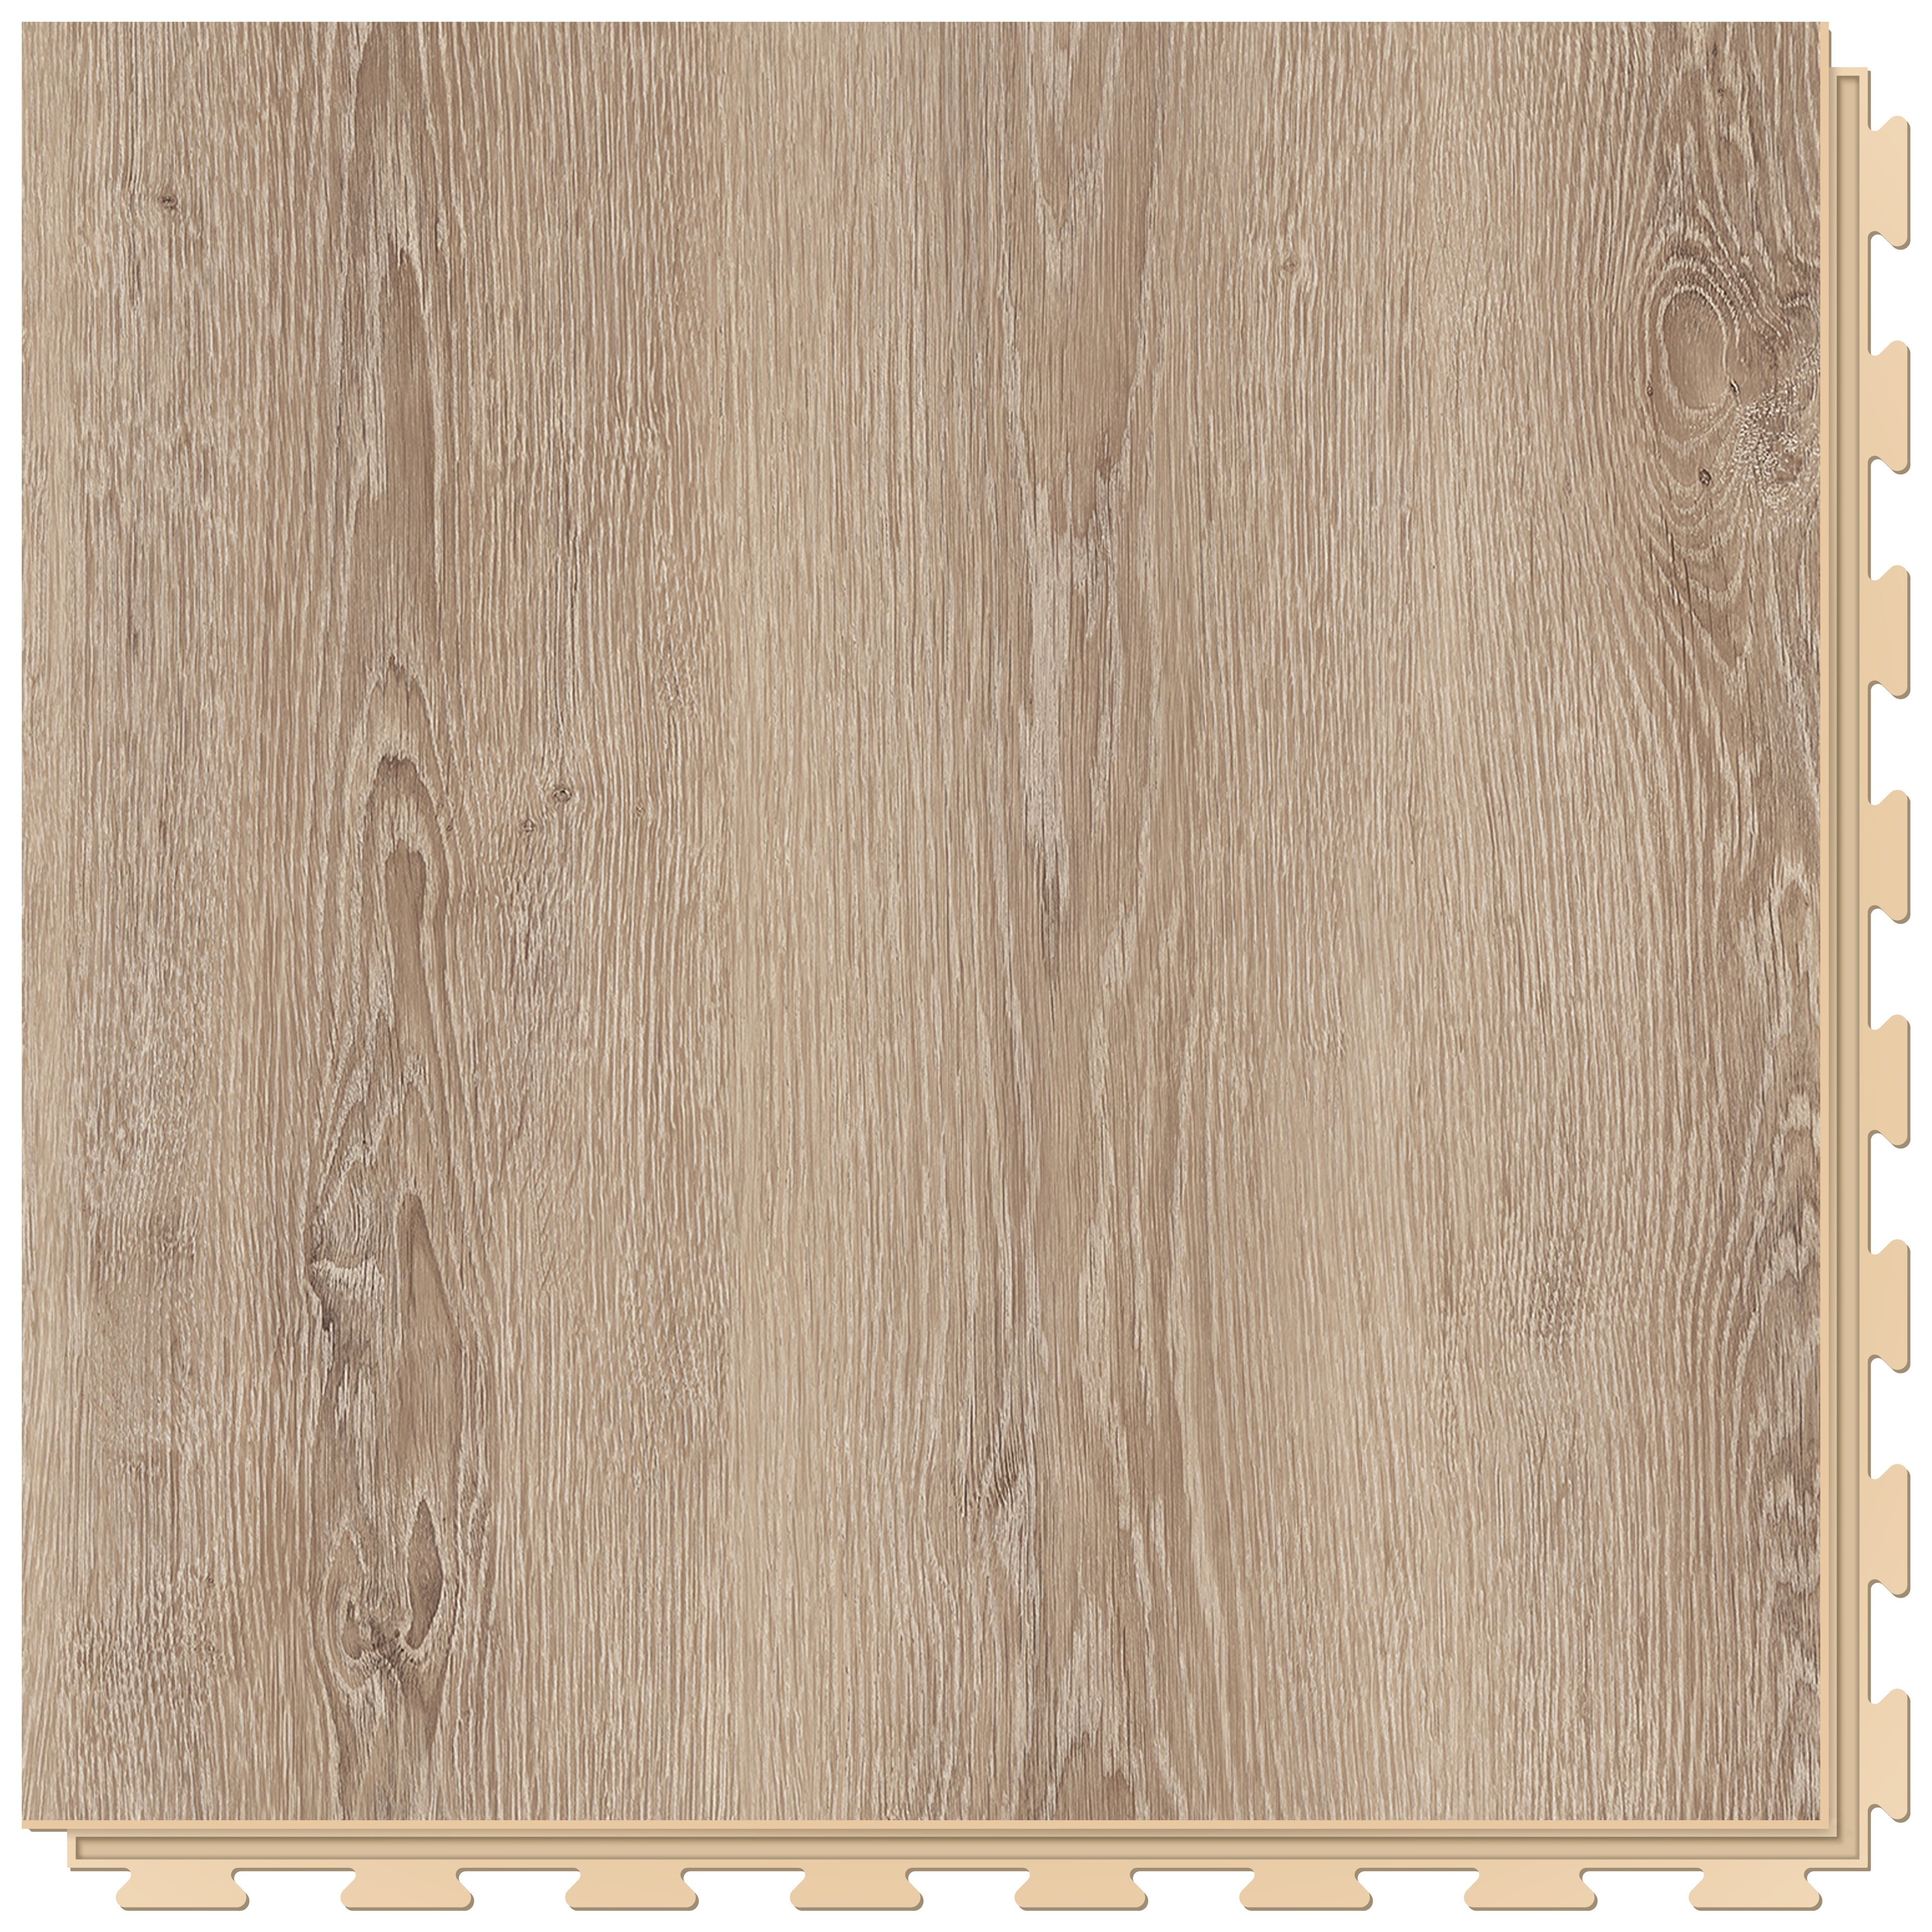 Hnědá PVC vinylová dlažba Fortelock Business Tyrolean oak W001 Beige - délka 66,8 cm, šířka 66,8 cm, výška 0,7 cm